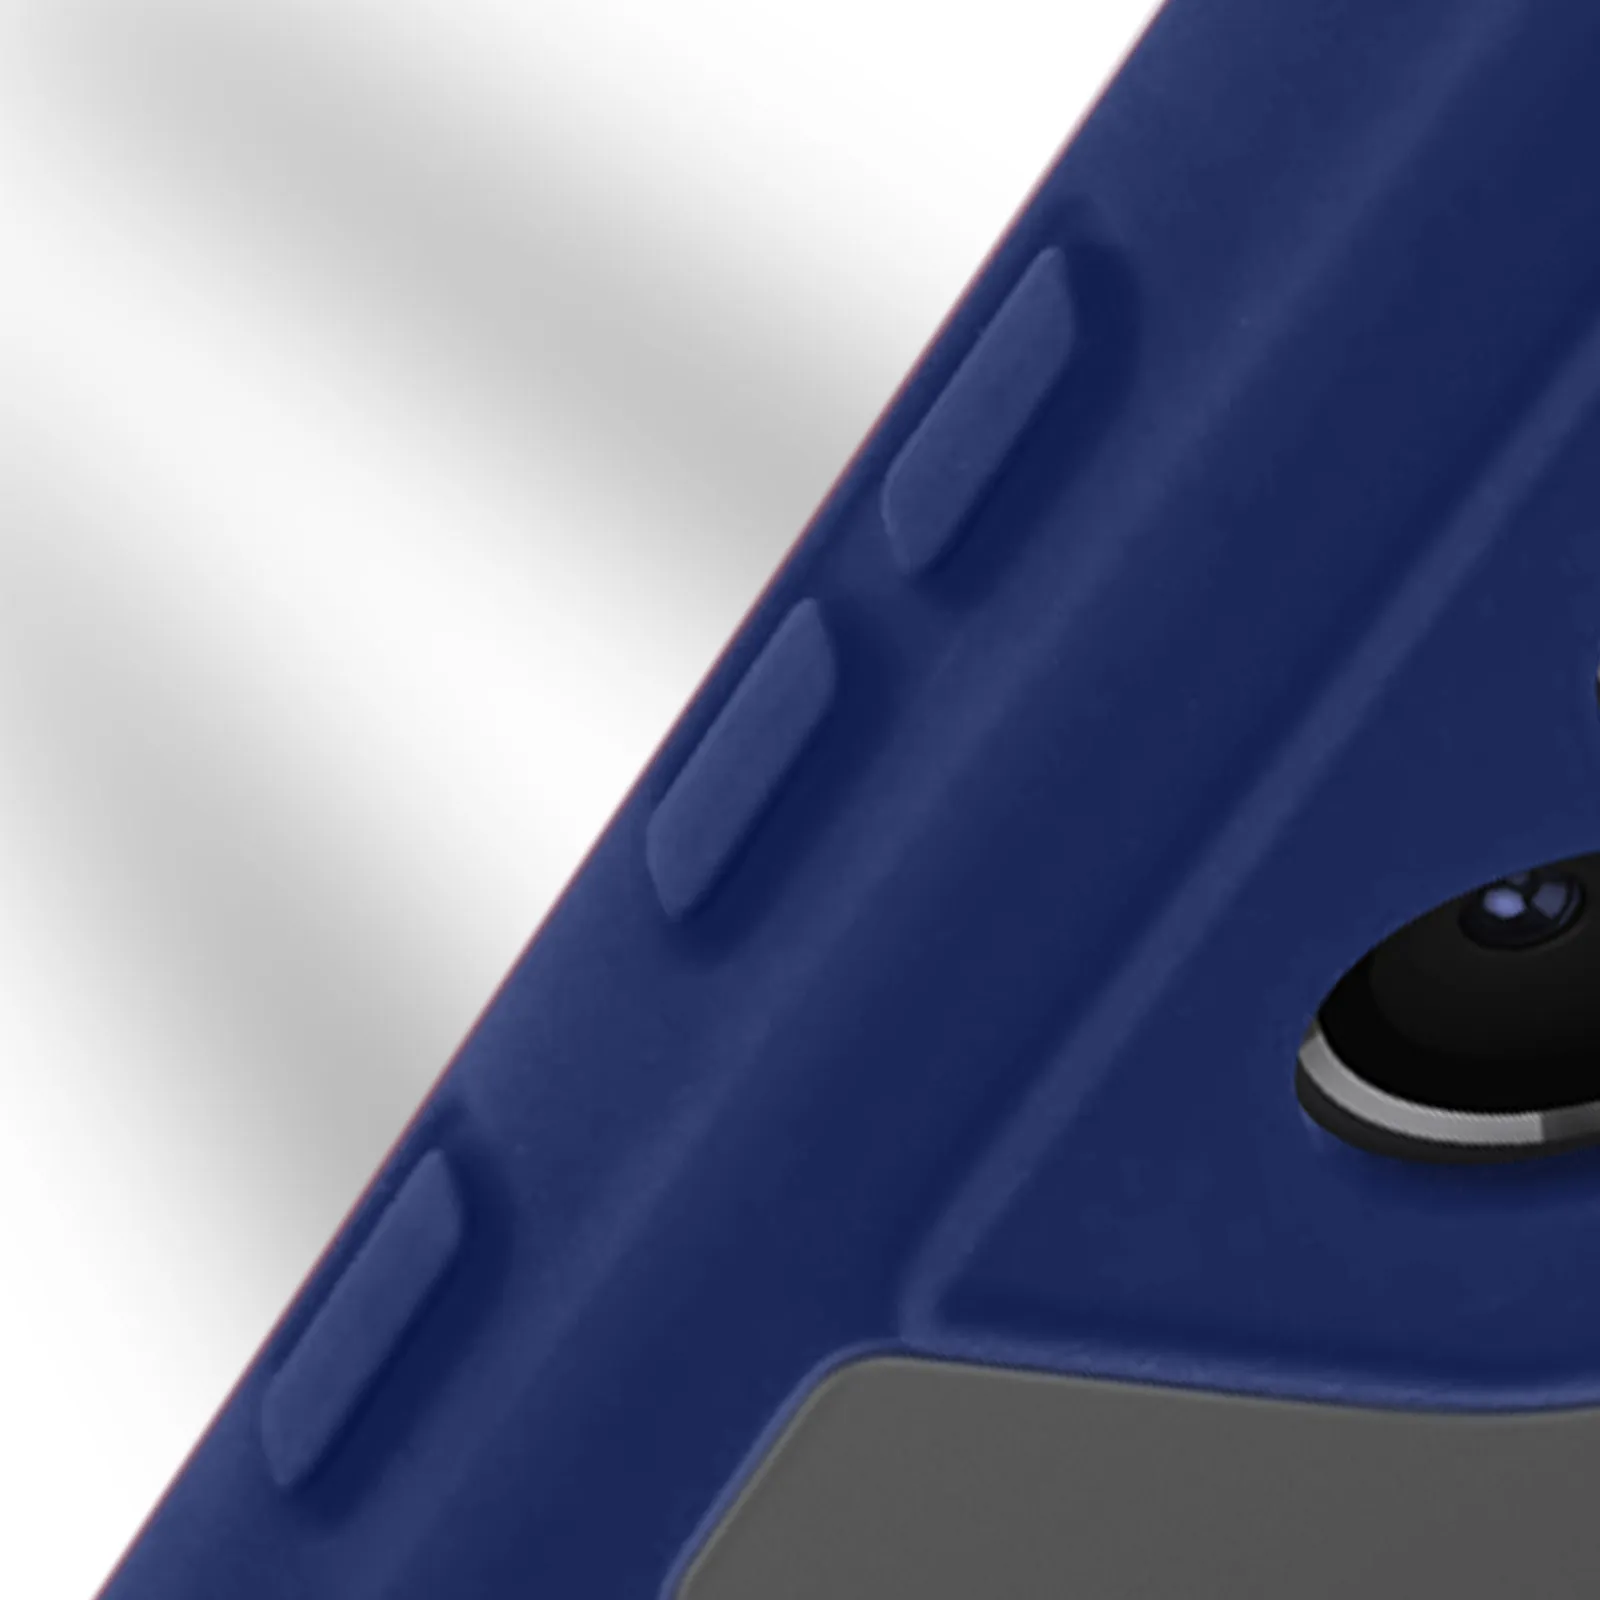 Coque silicone+protection caméra bleu nuit iPhone 12 Pro